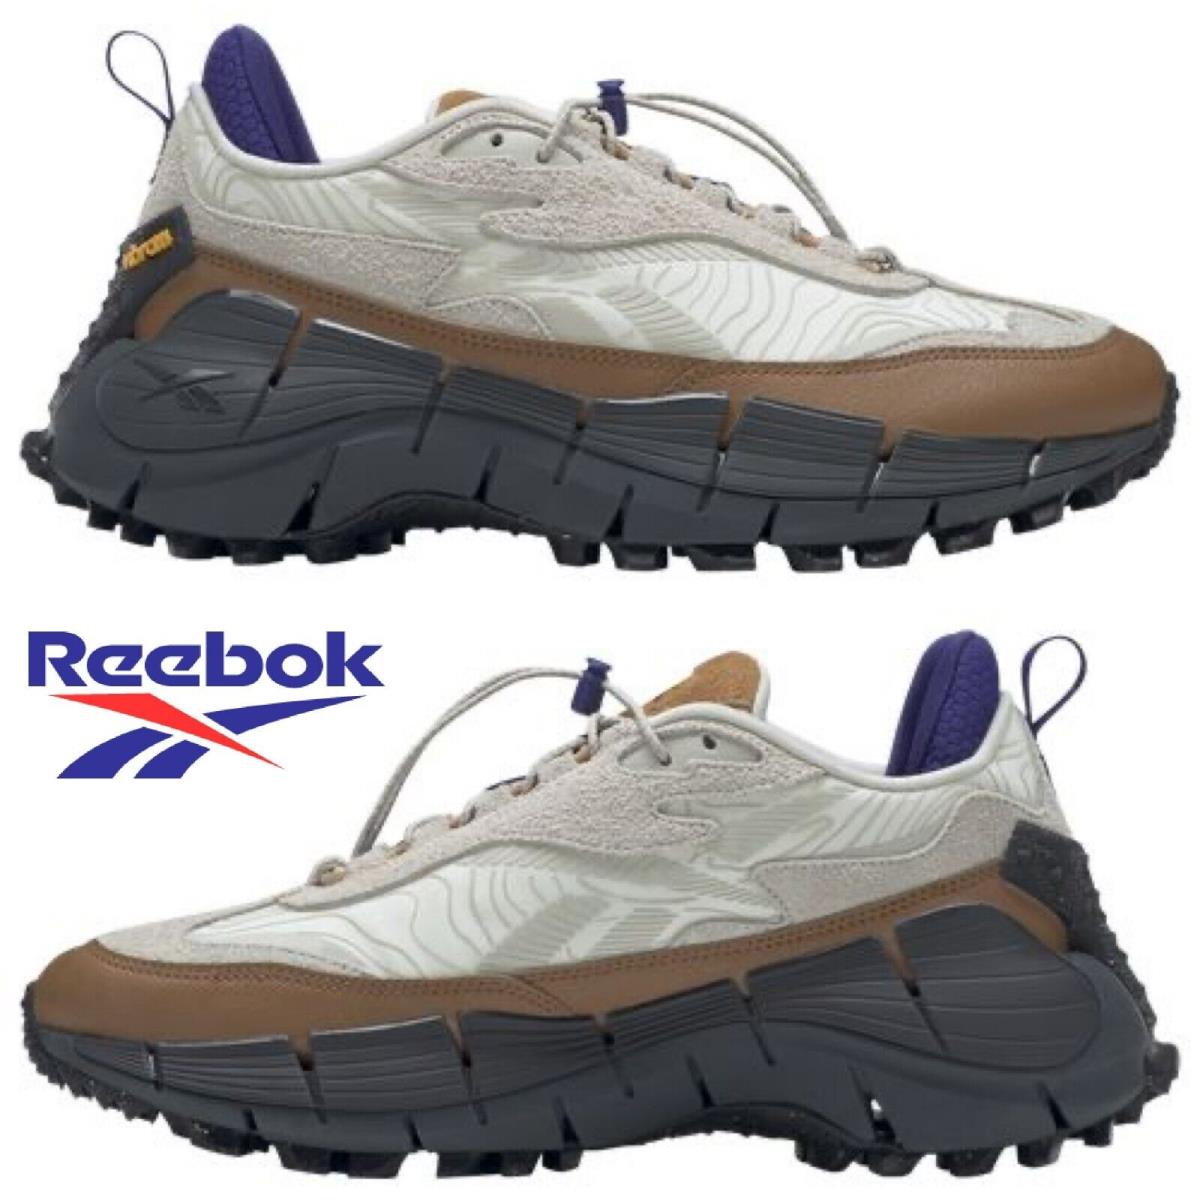 Reebok Zig Kinetica 2.5 Edge Men`s Sneakers Running Training Shoes Casual Sport